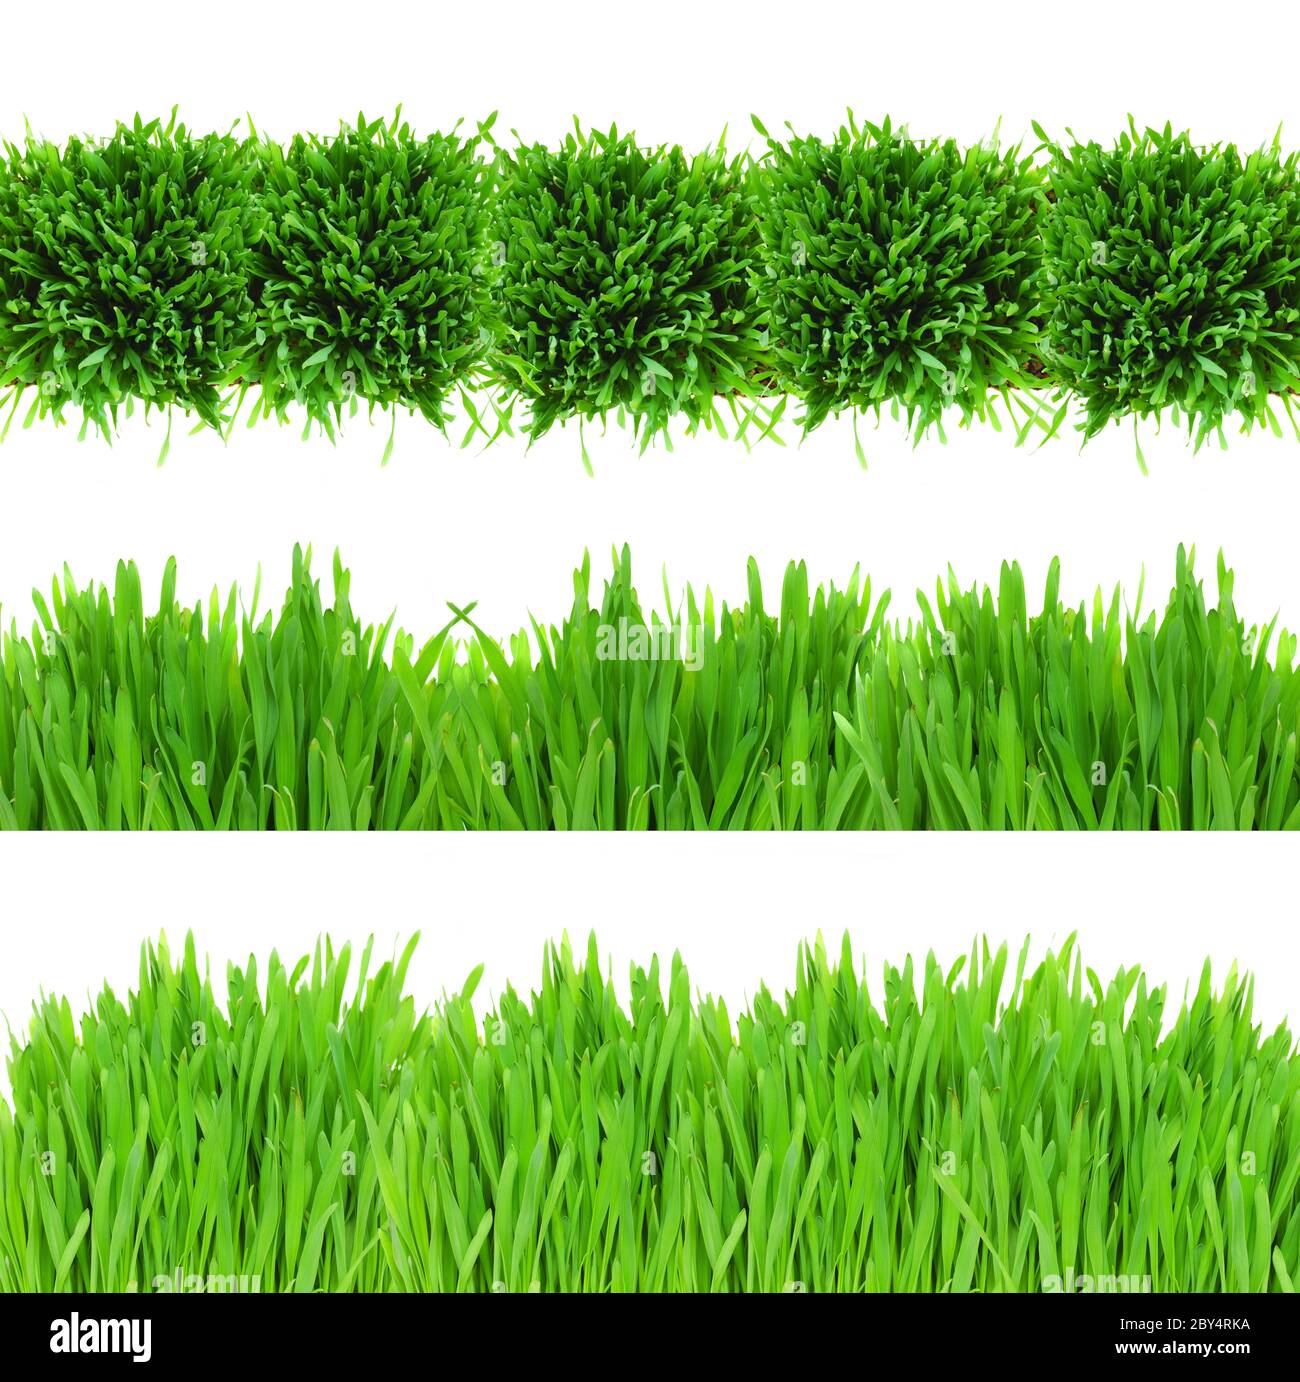 bordure verte en herbe Banque D'Images